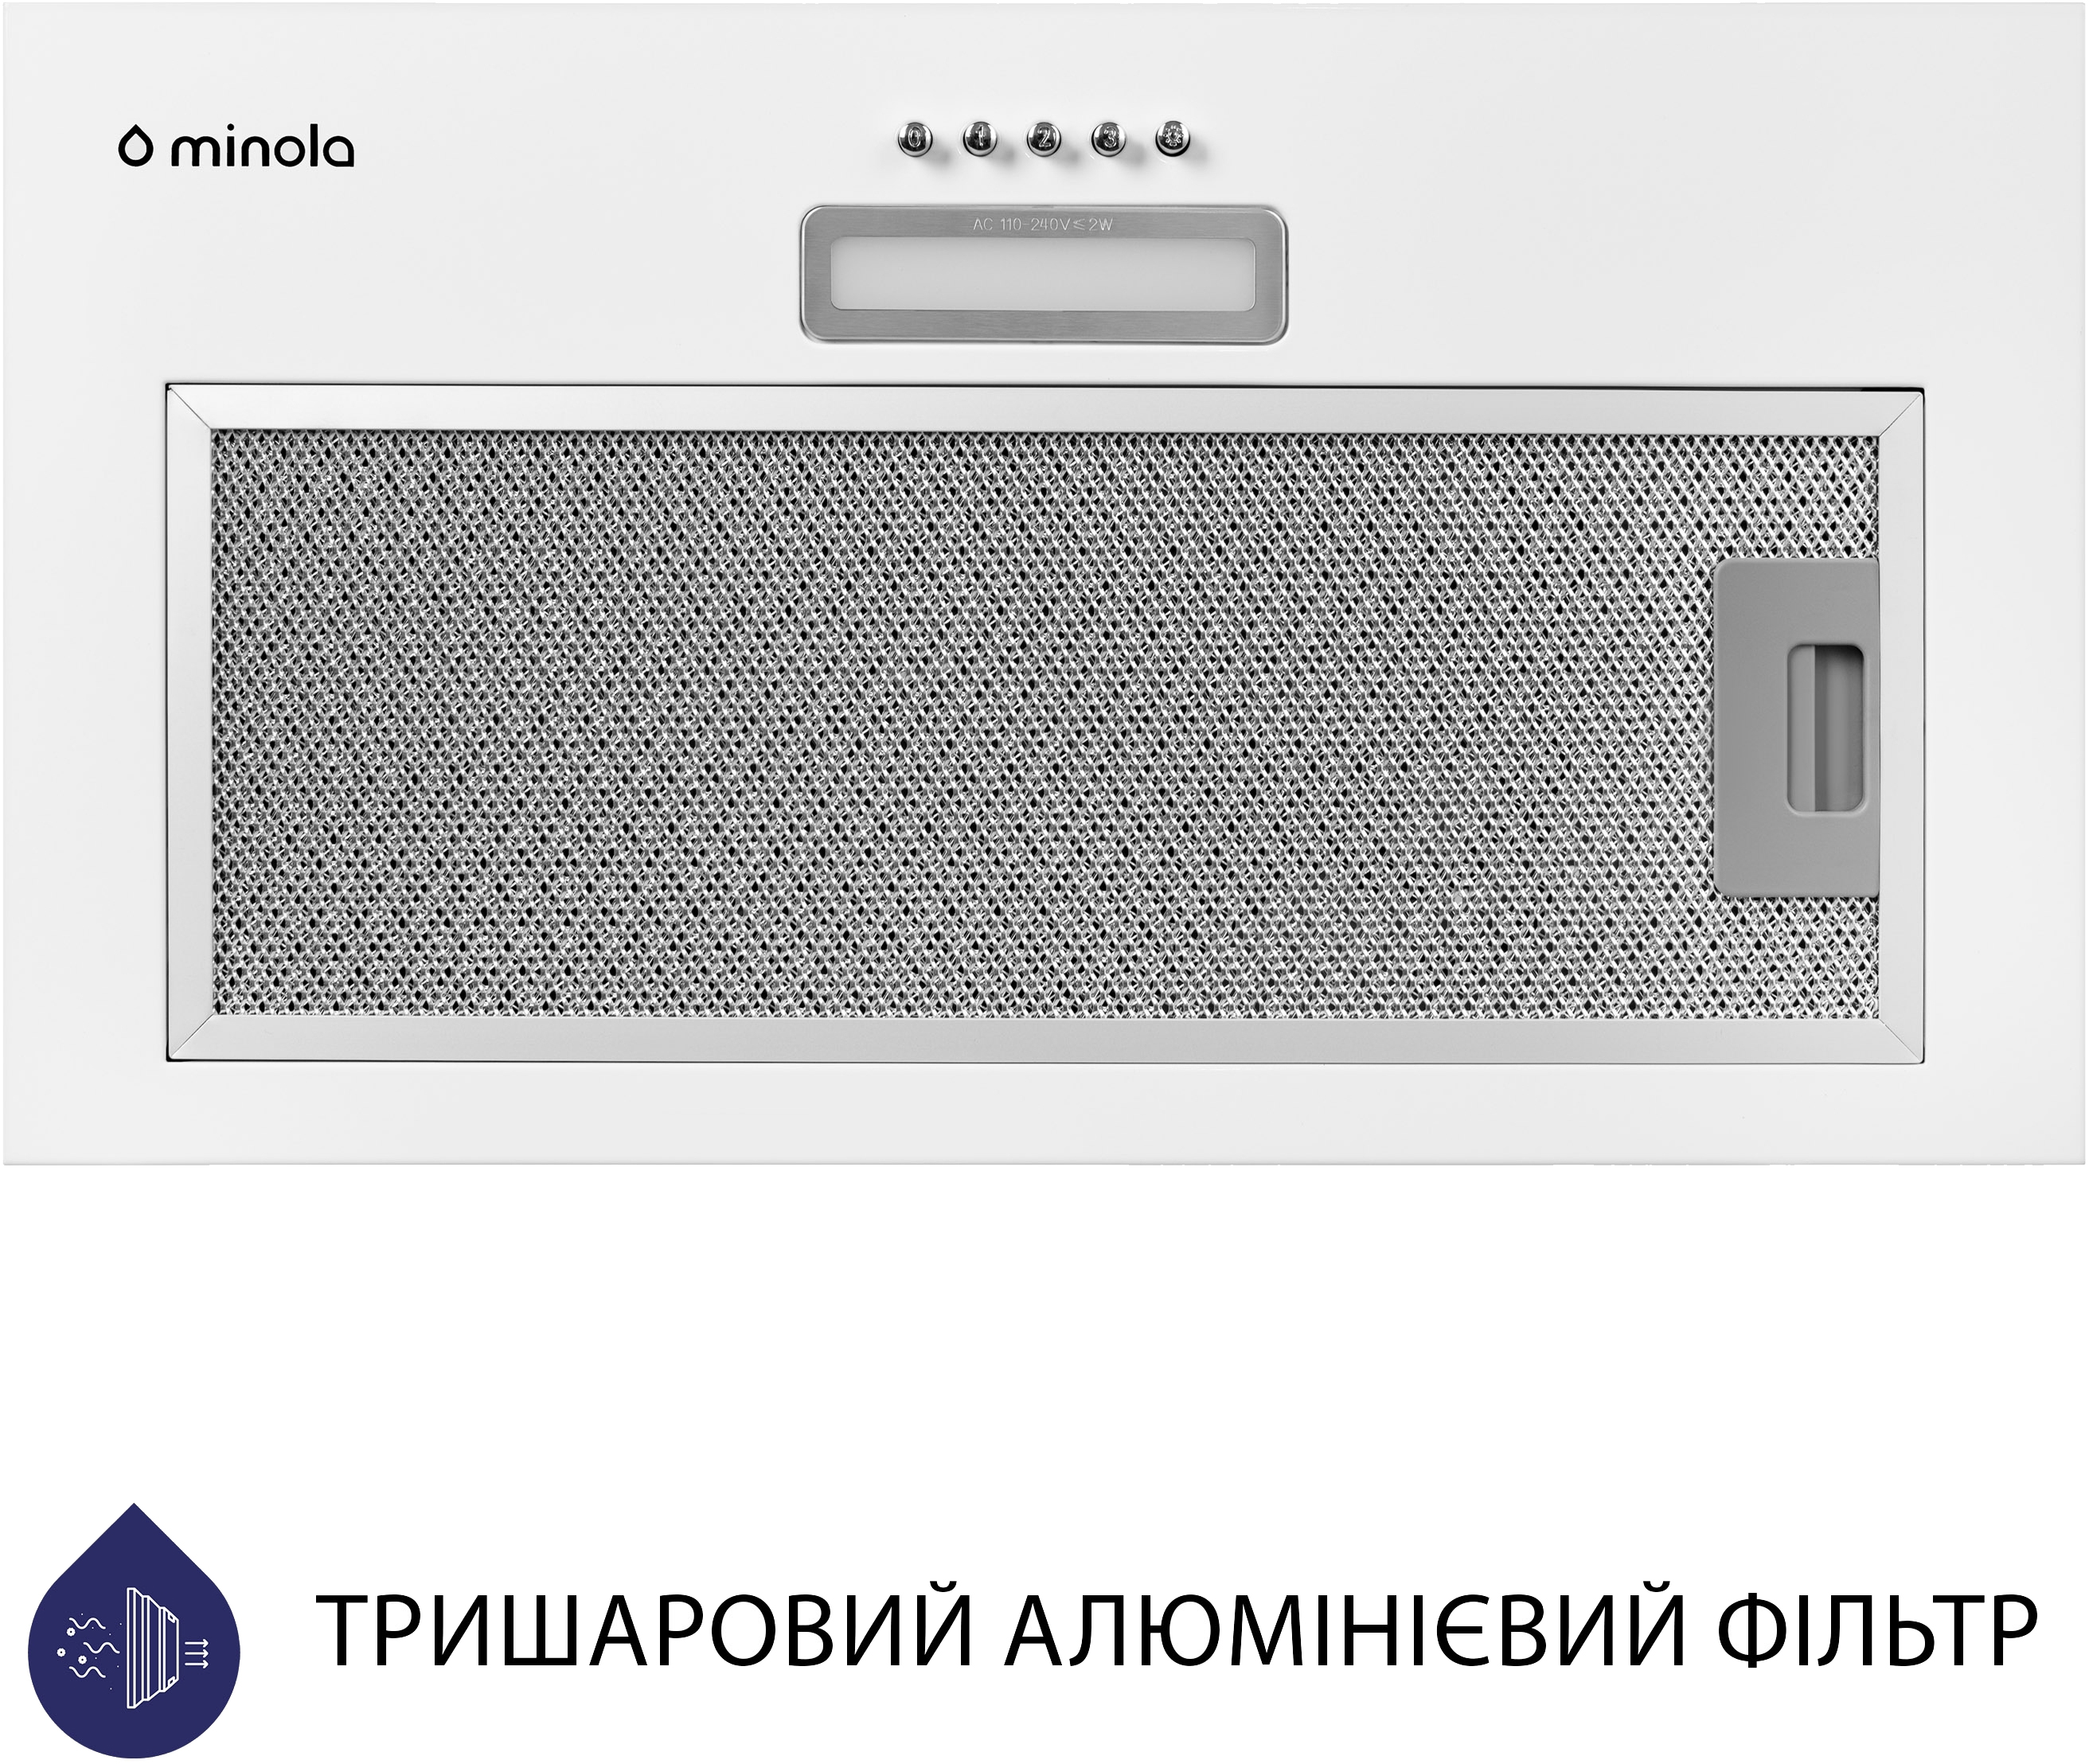 продаём Minola HBI 5214 WH 700 LED в Украине - фото 4